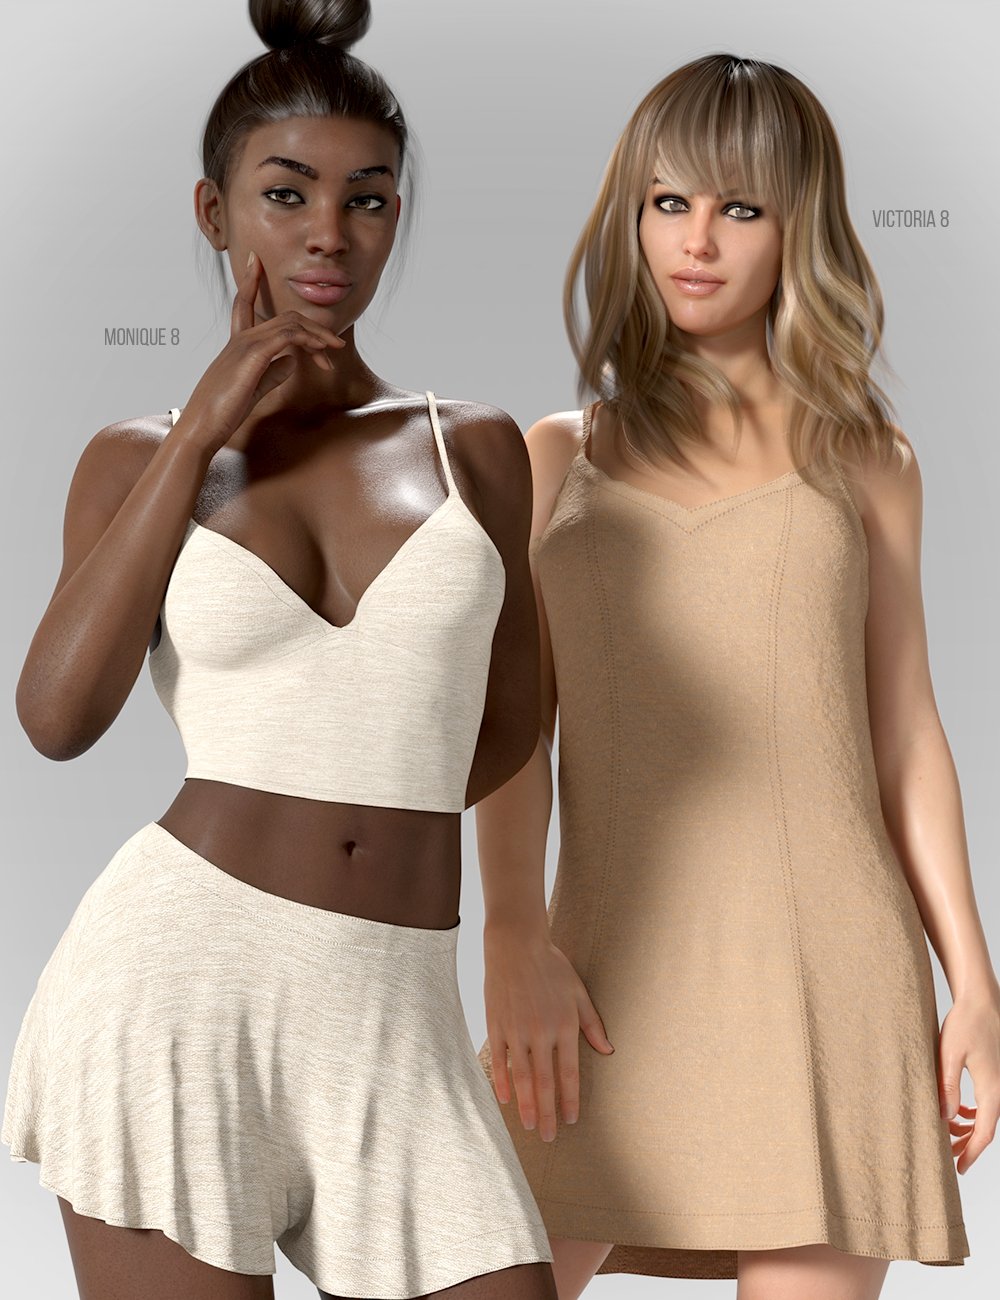 dForce Sterling's Nightwear Collection by: Lyoness, 3D Models by Daz 3D